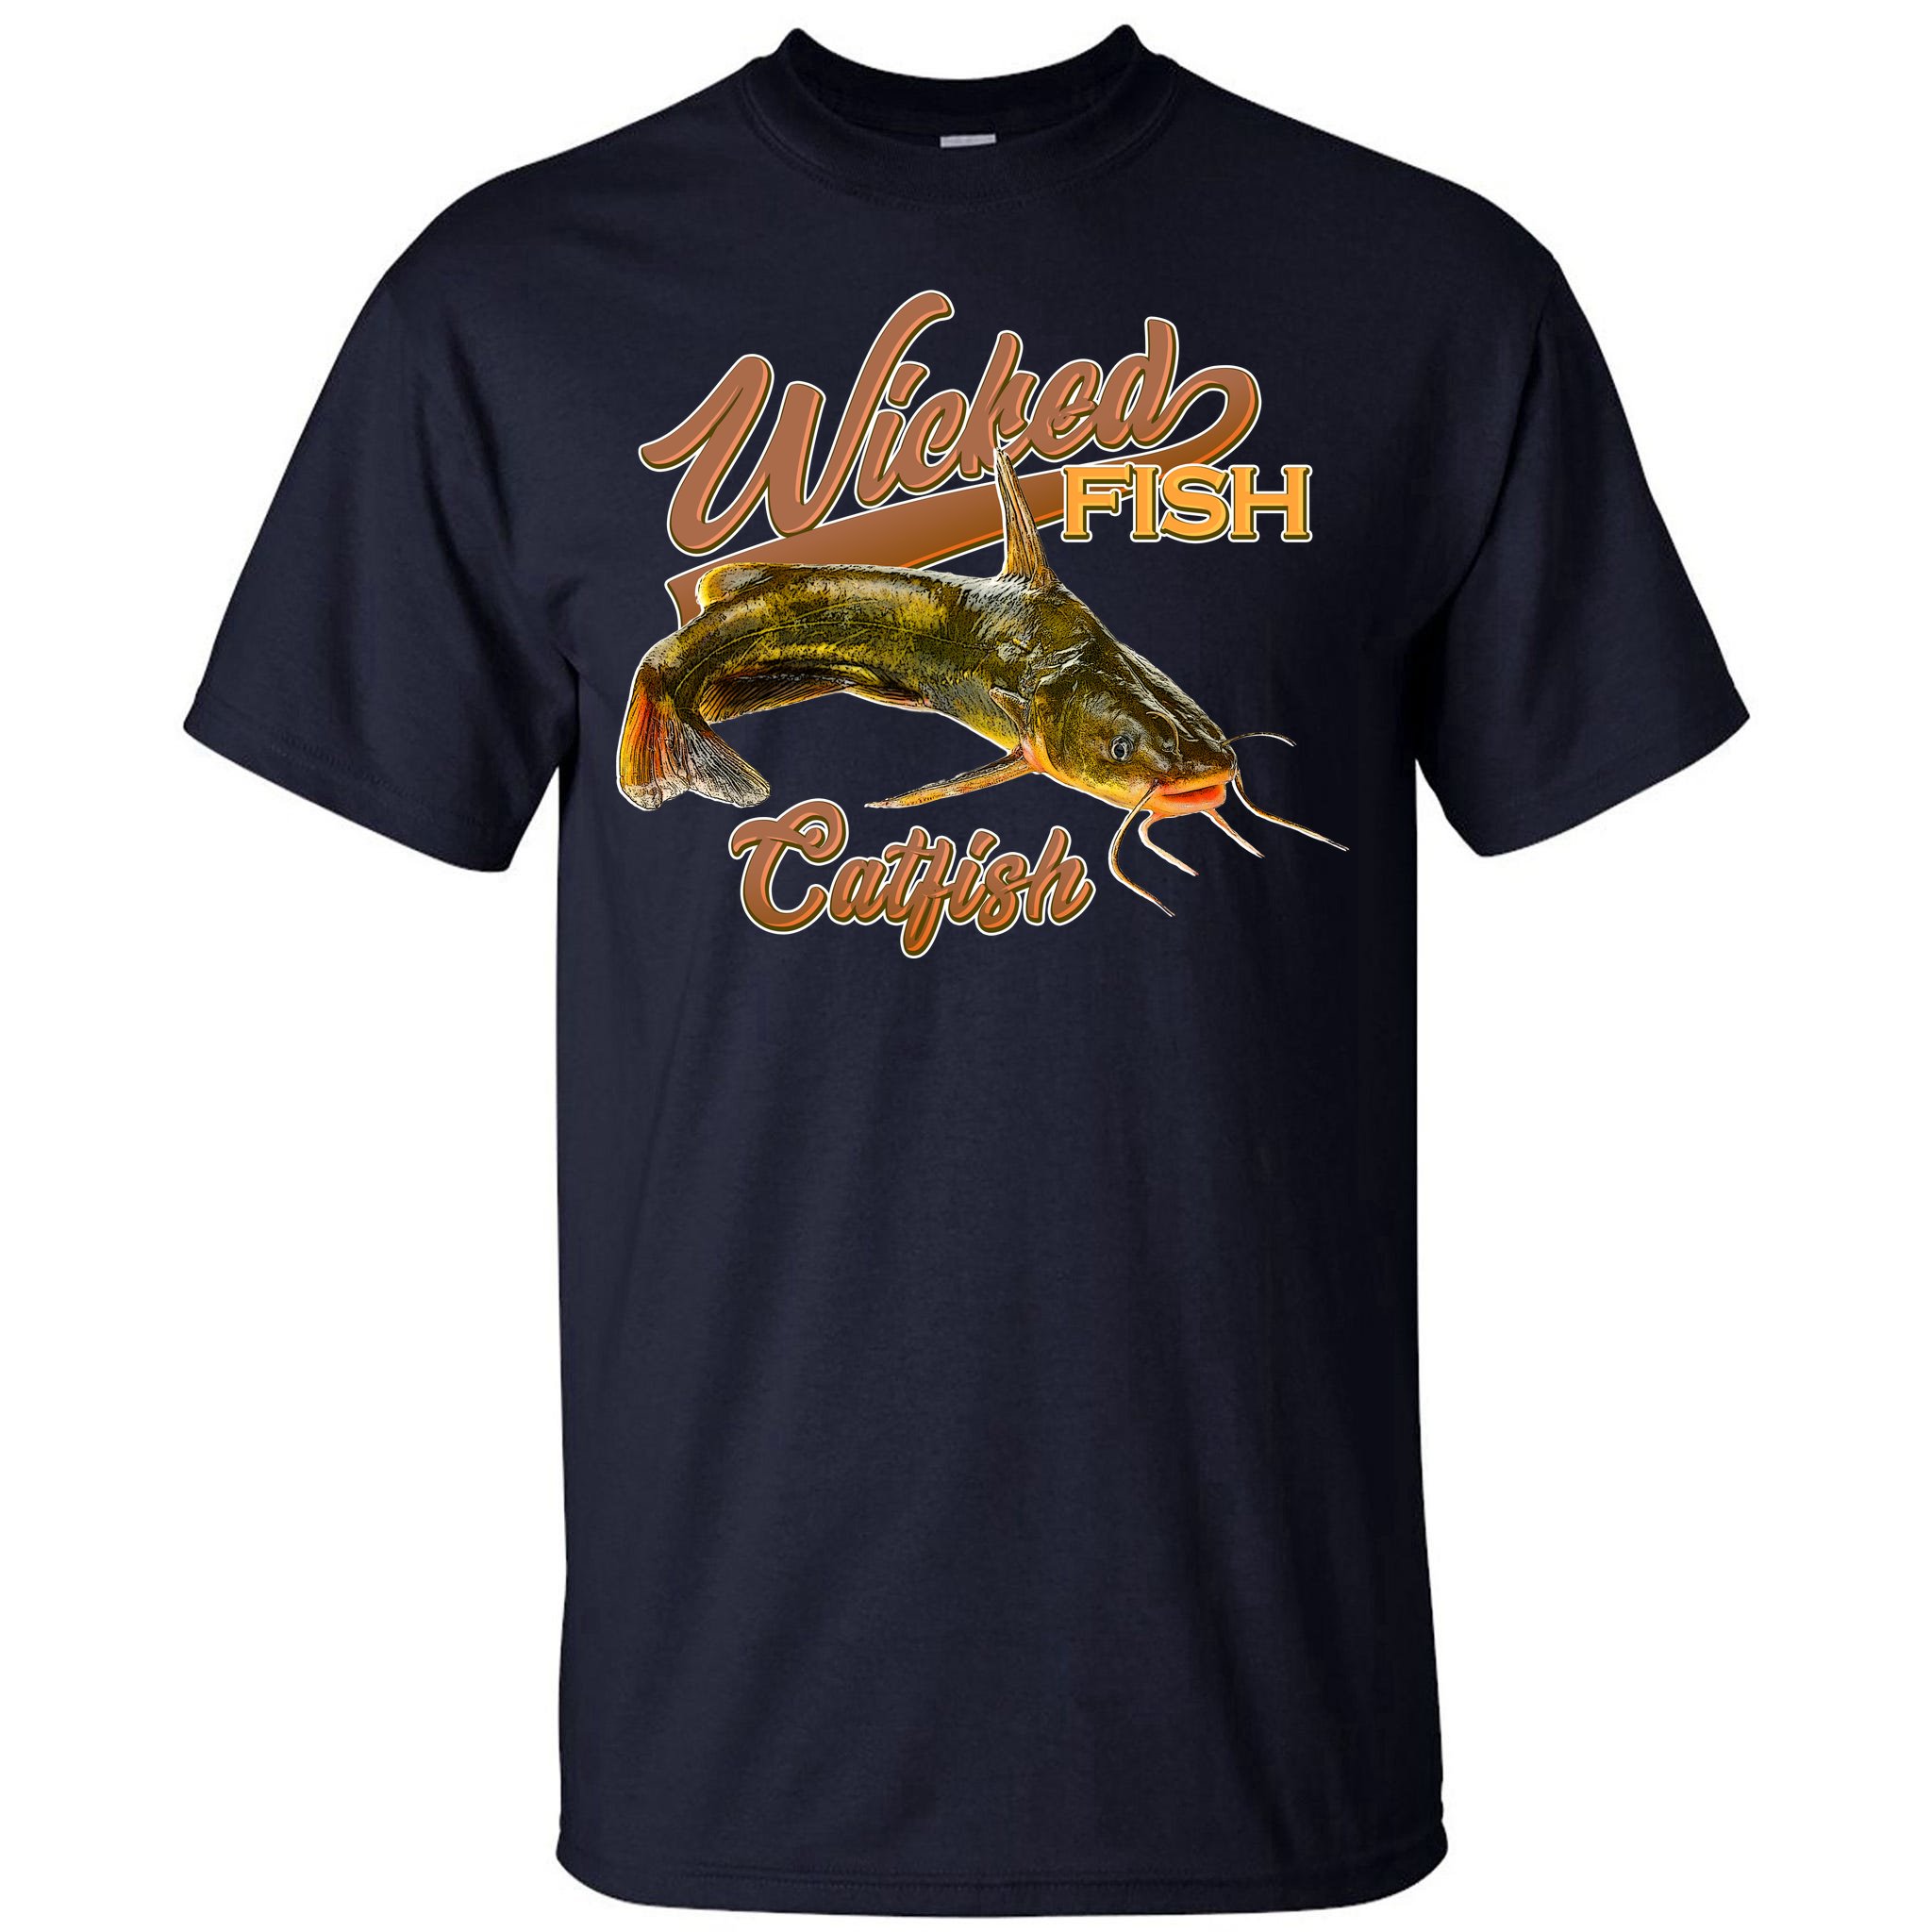 Wicked Fish Catfish Premium T-Shirt, Long Sleeve / X-Large